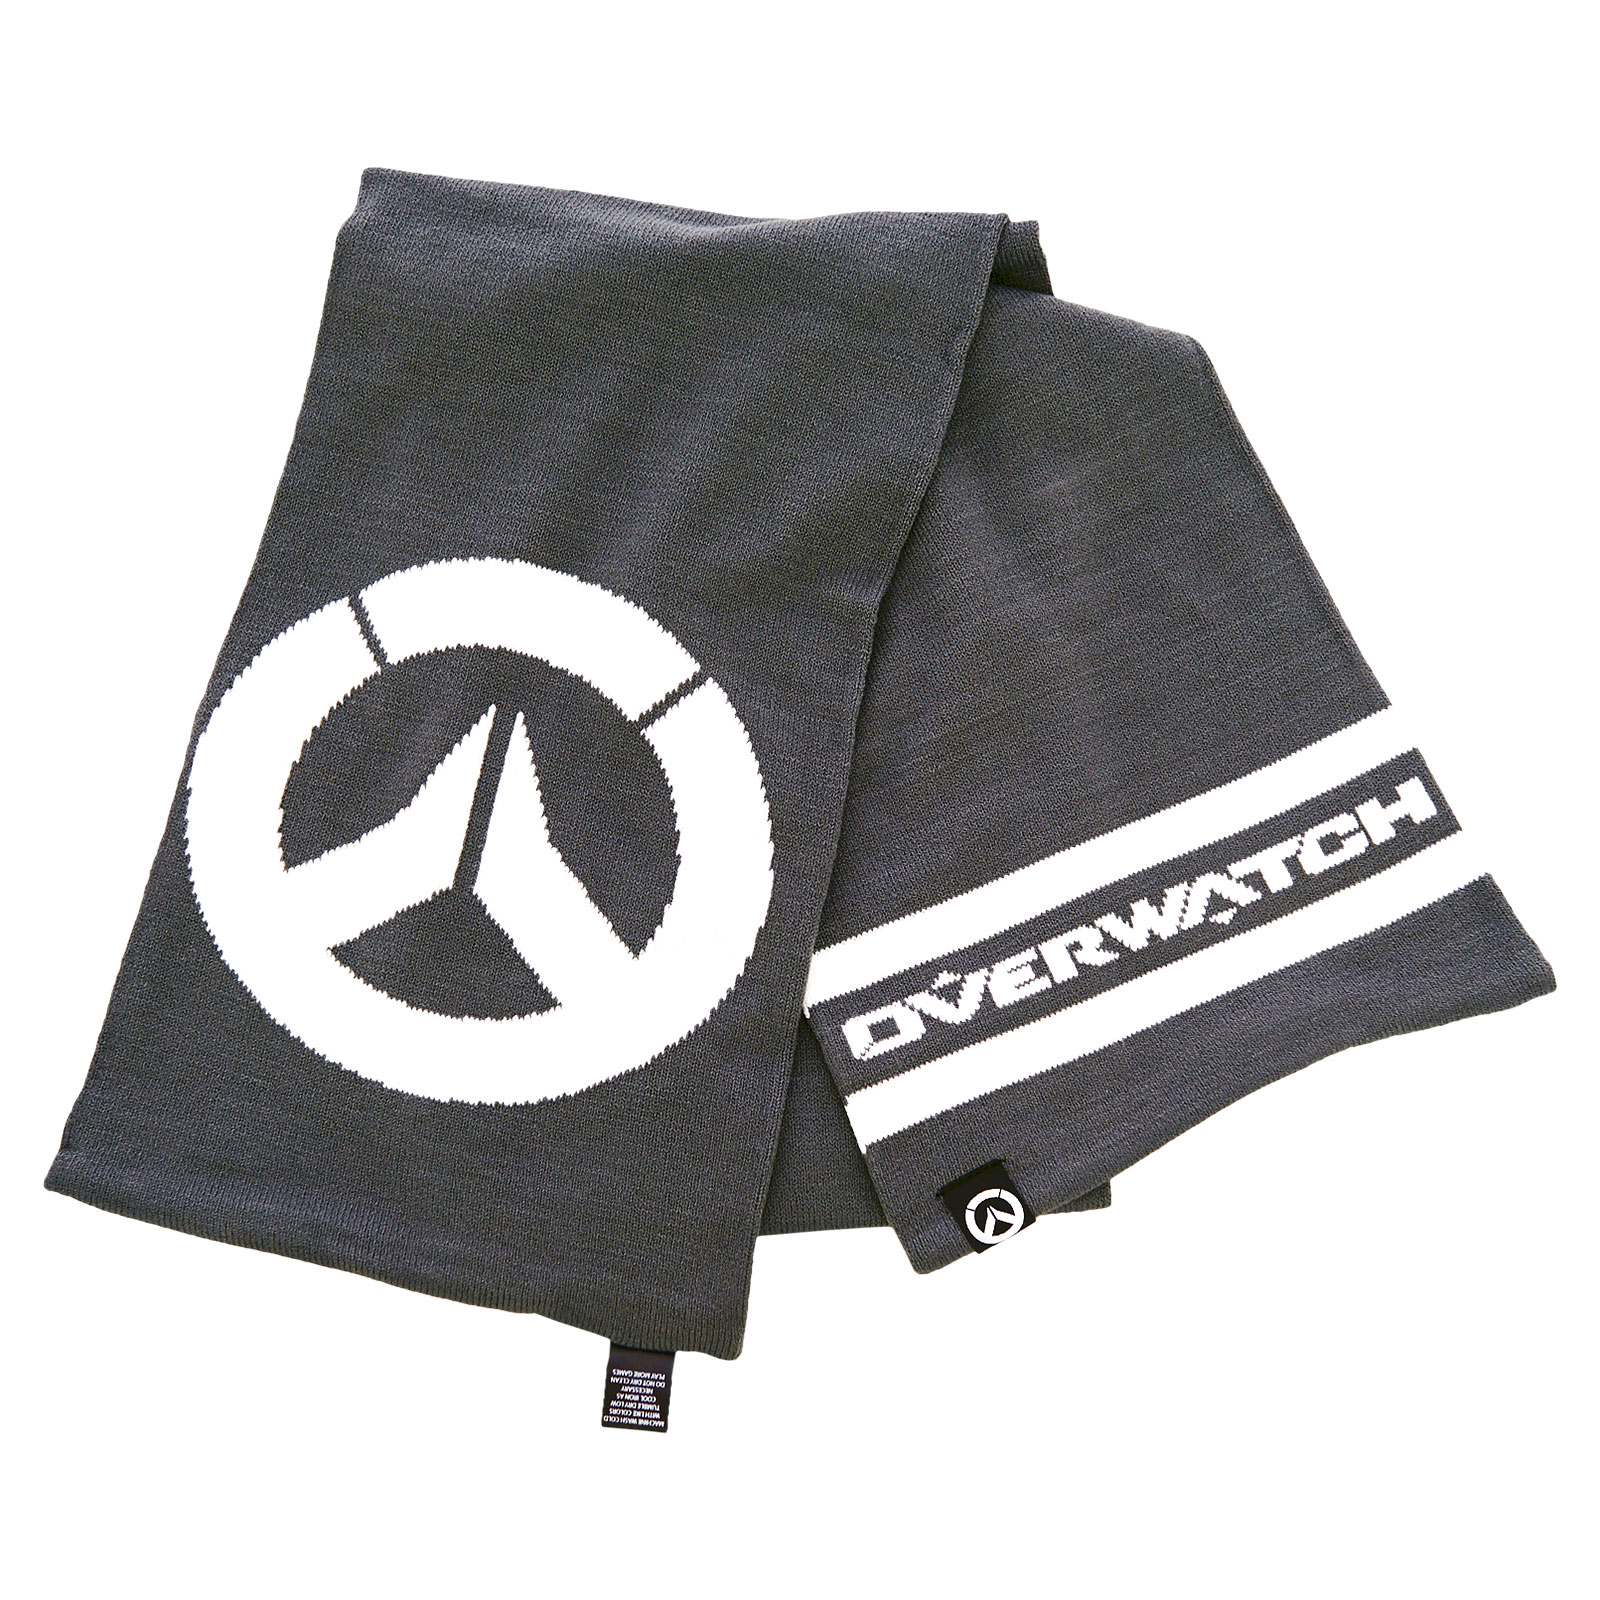 Overwatch - Écharpe Logo gris